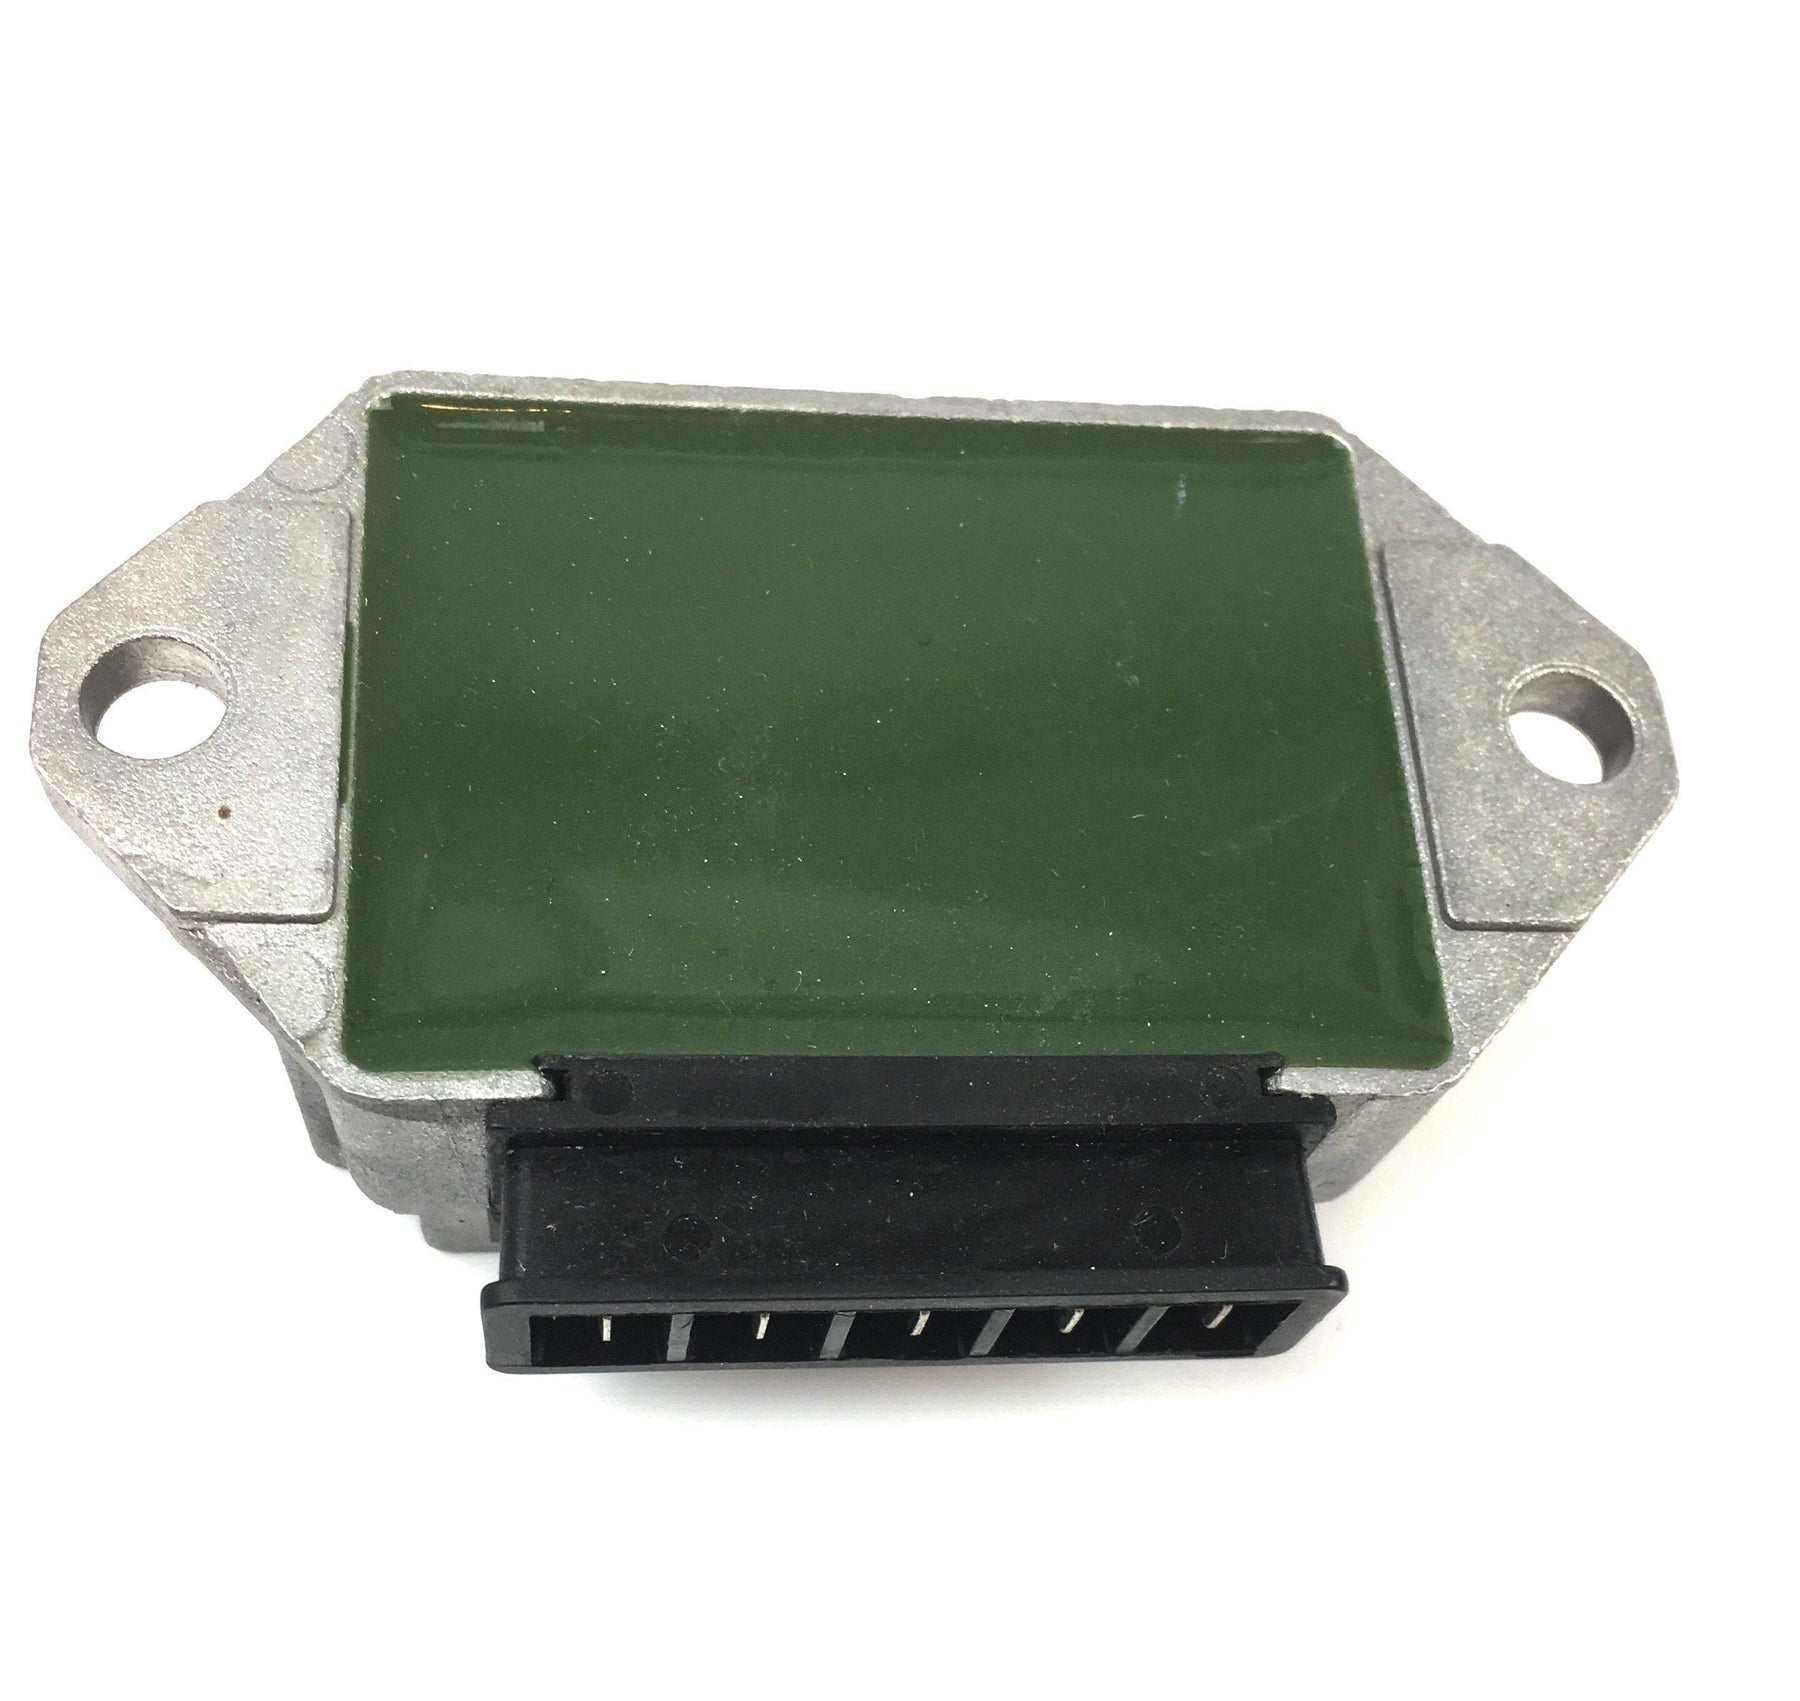 Lambretta - Lighting Regulator Box for Electronic Kit - Beedspeed